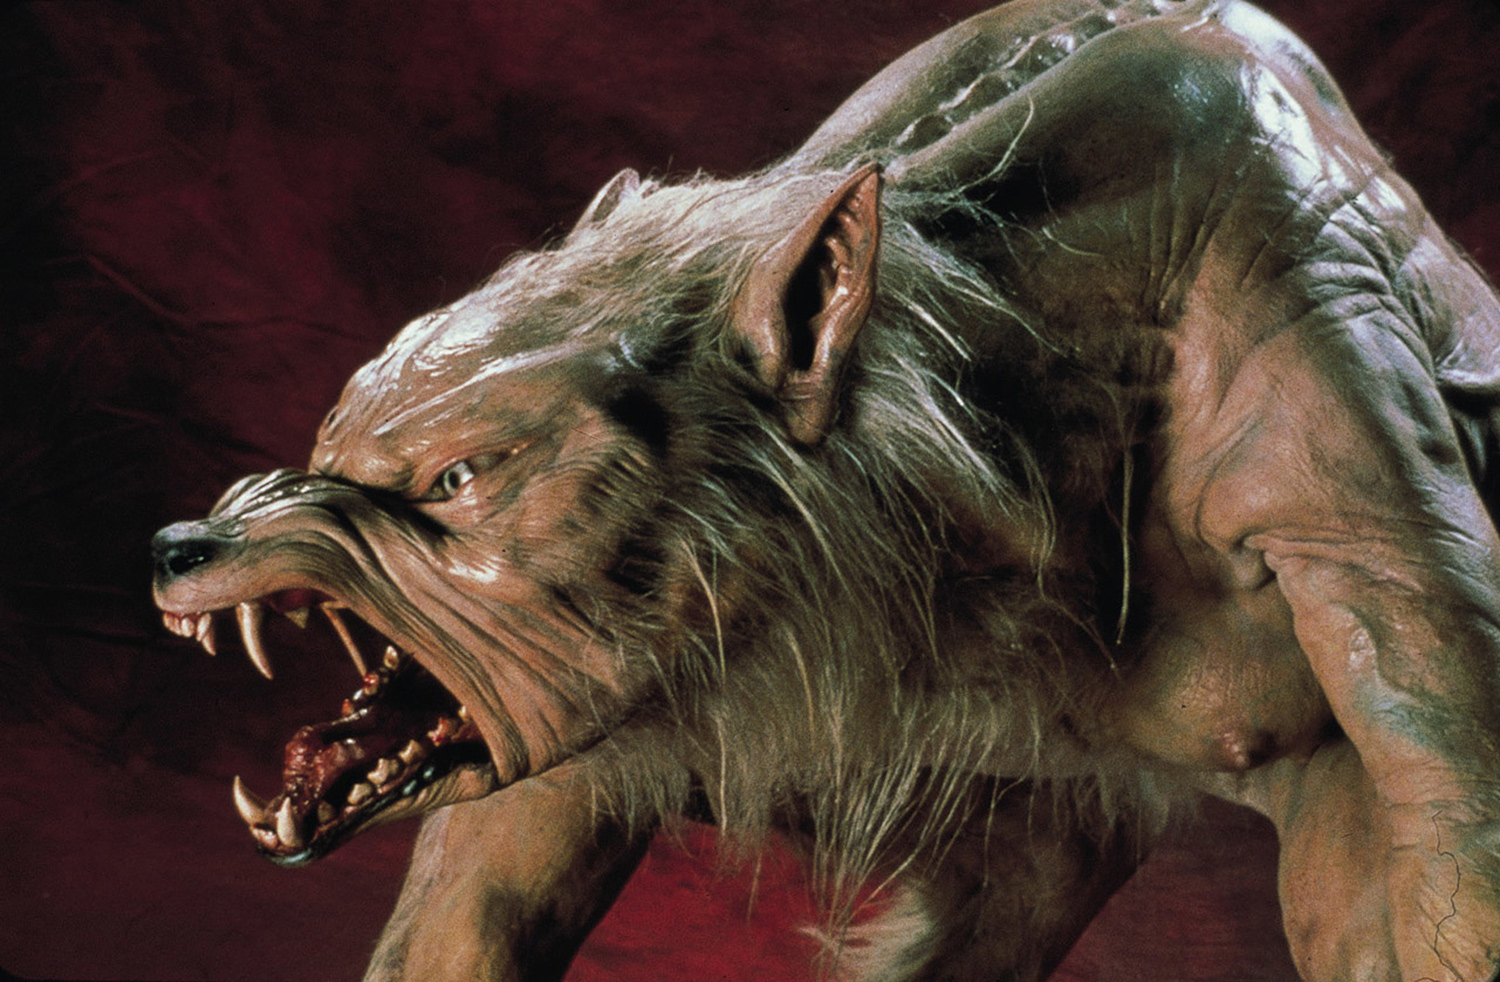 Canadian Horror Films - Ginger Snaps, werewolf